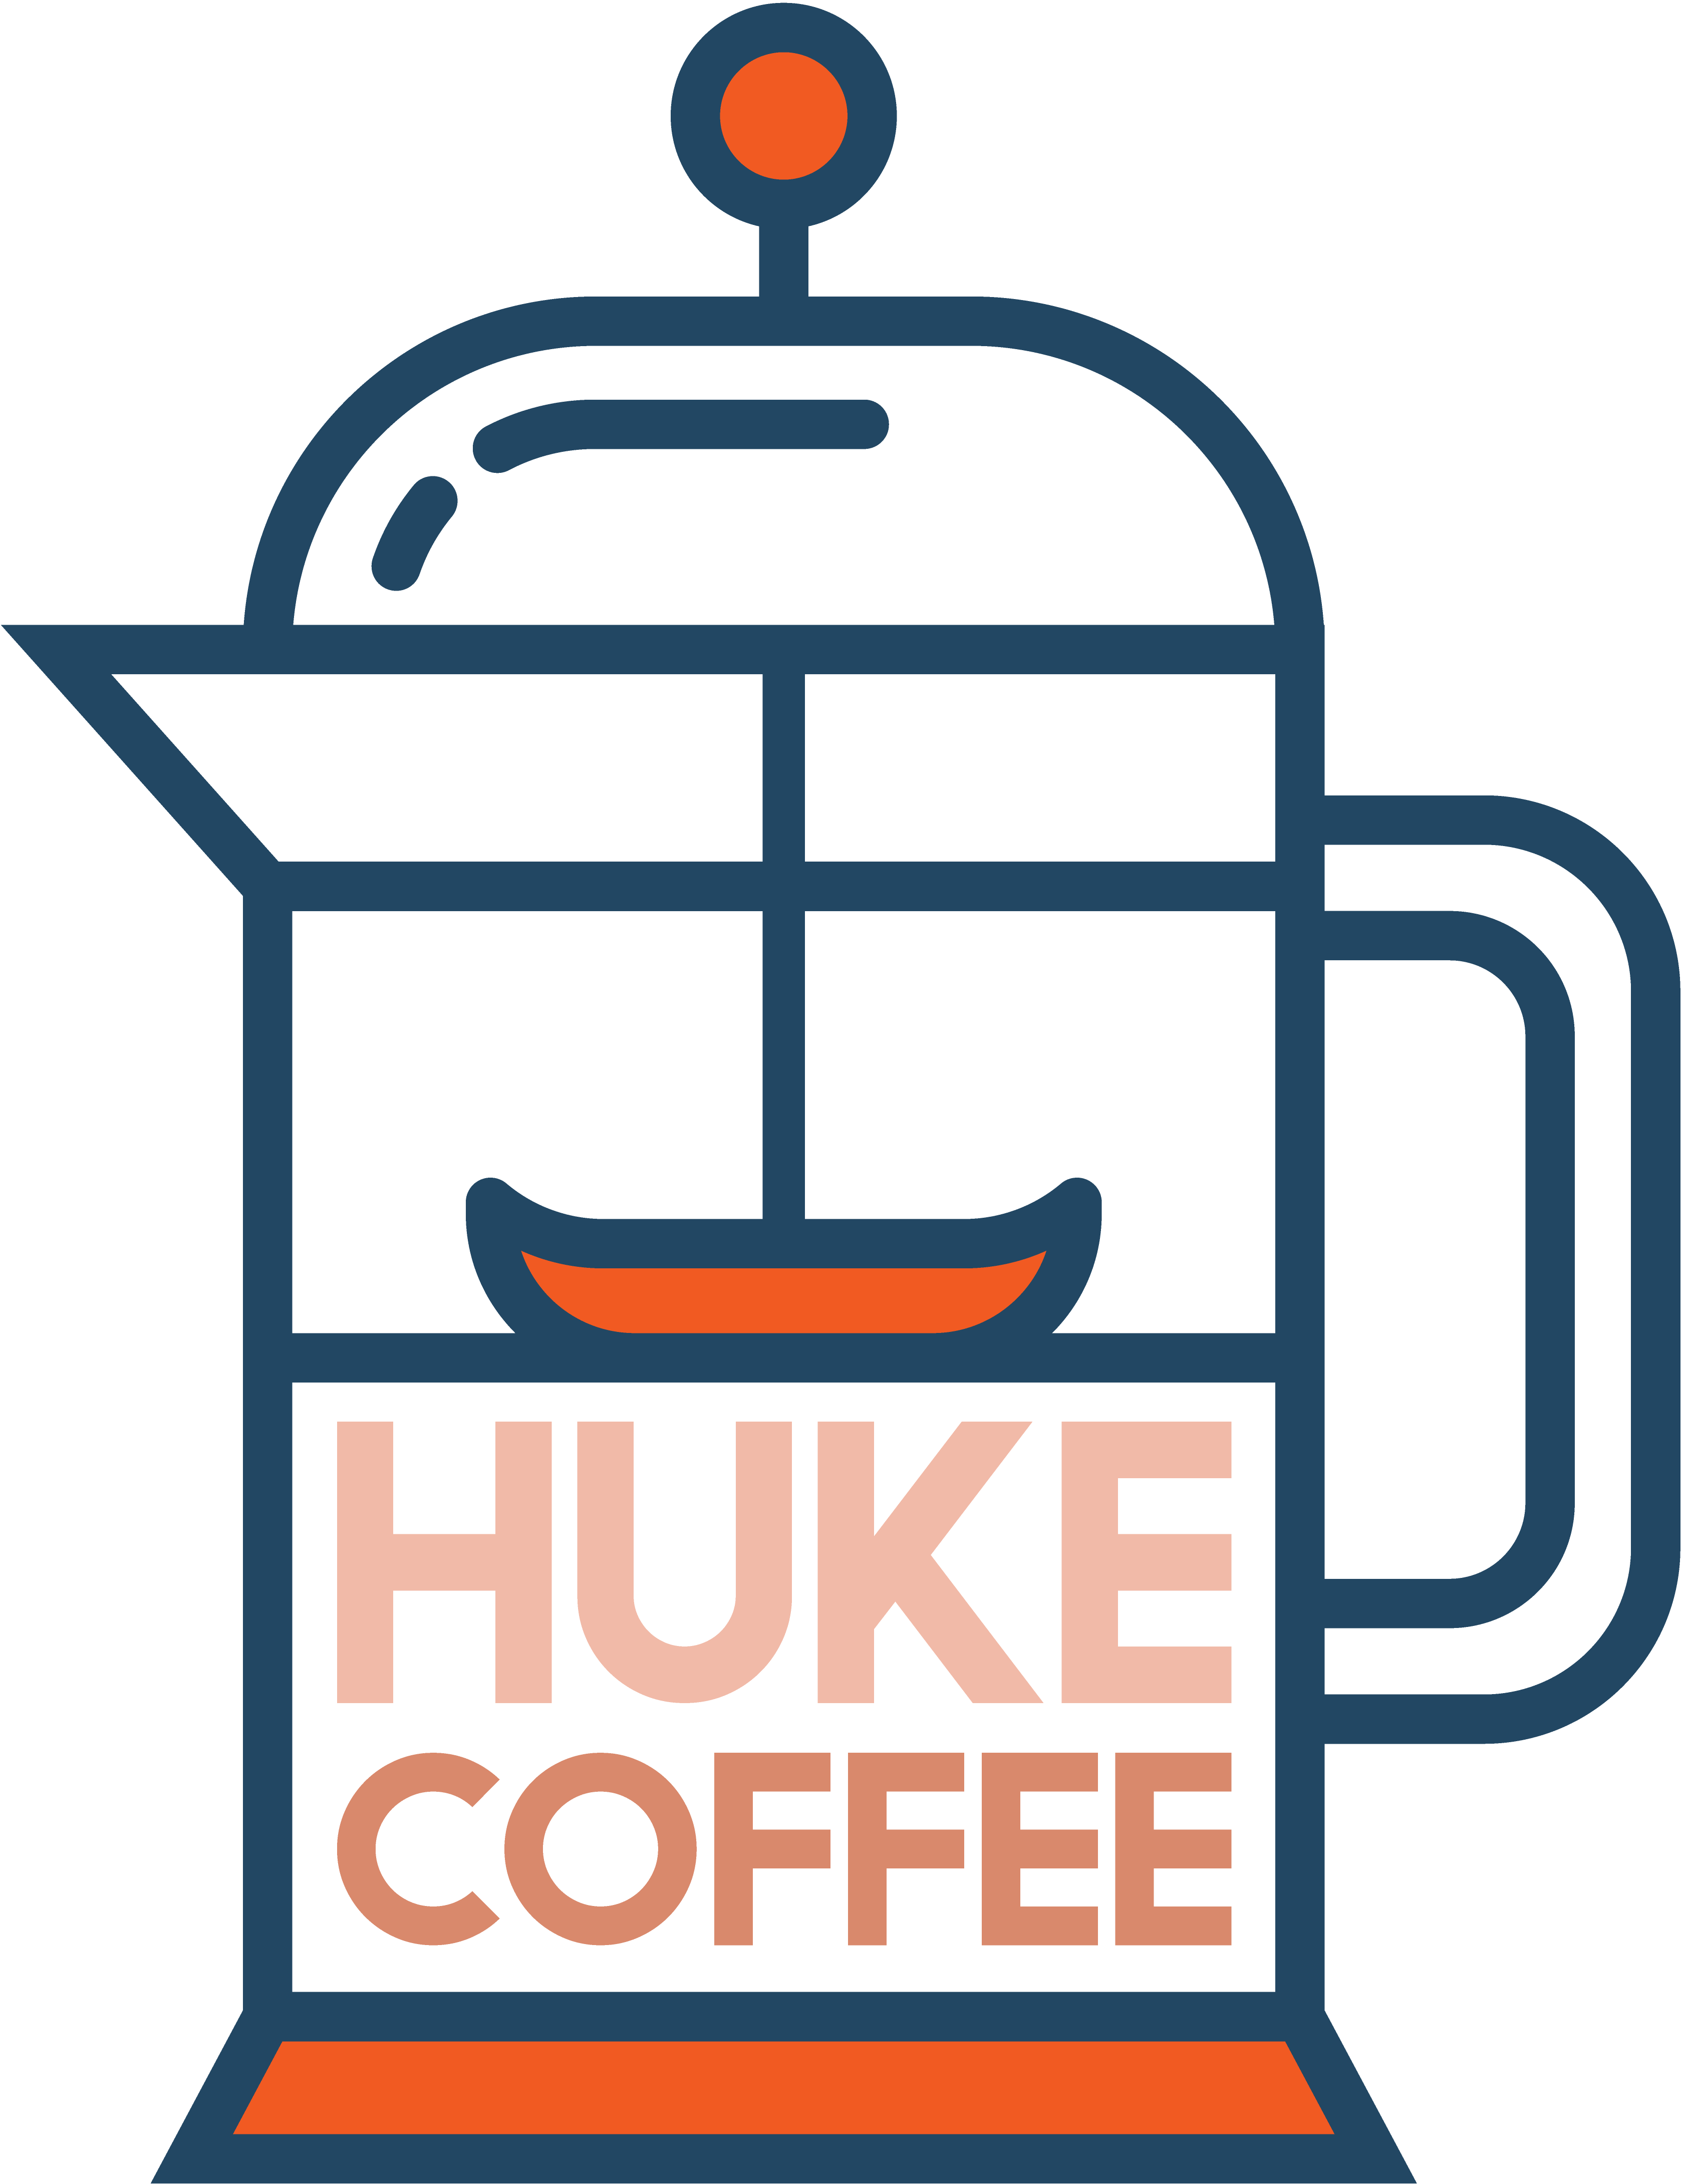 Huke Coffee